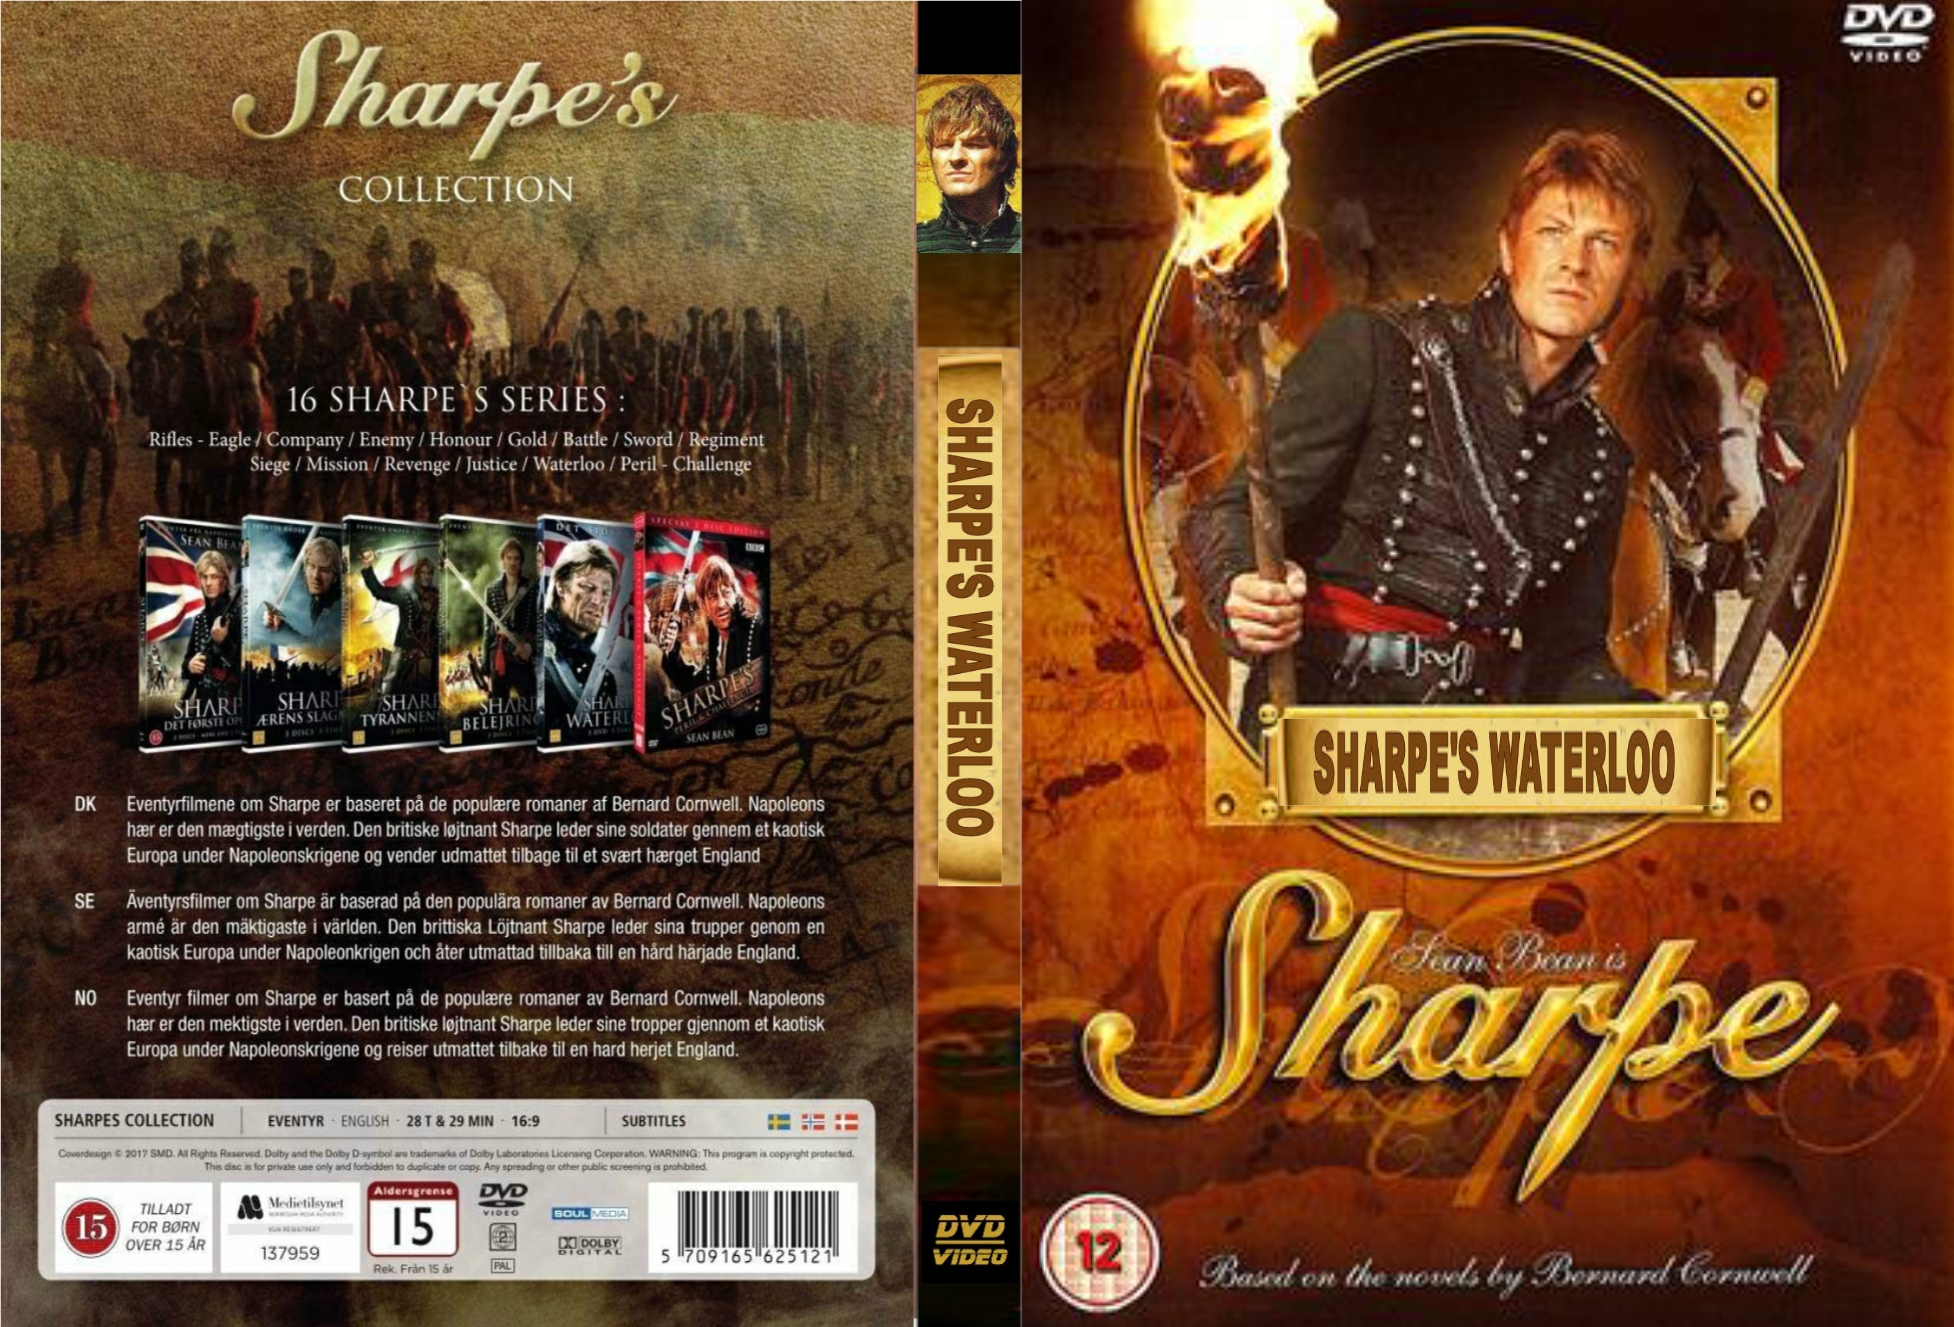 Sharpe's Waterloo - DvD 14